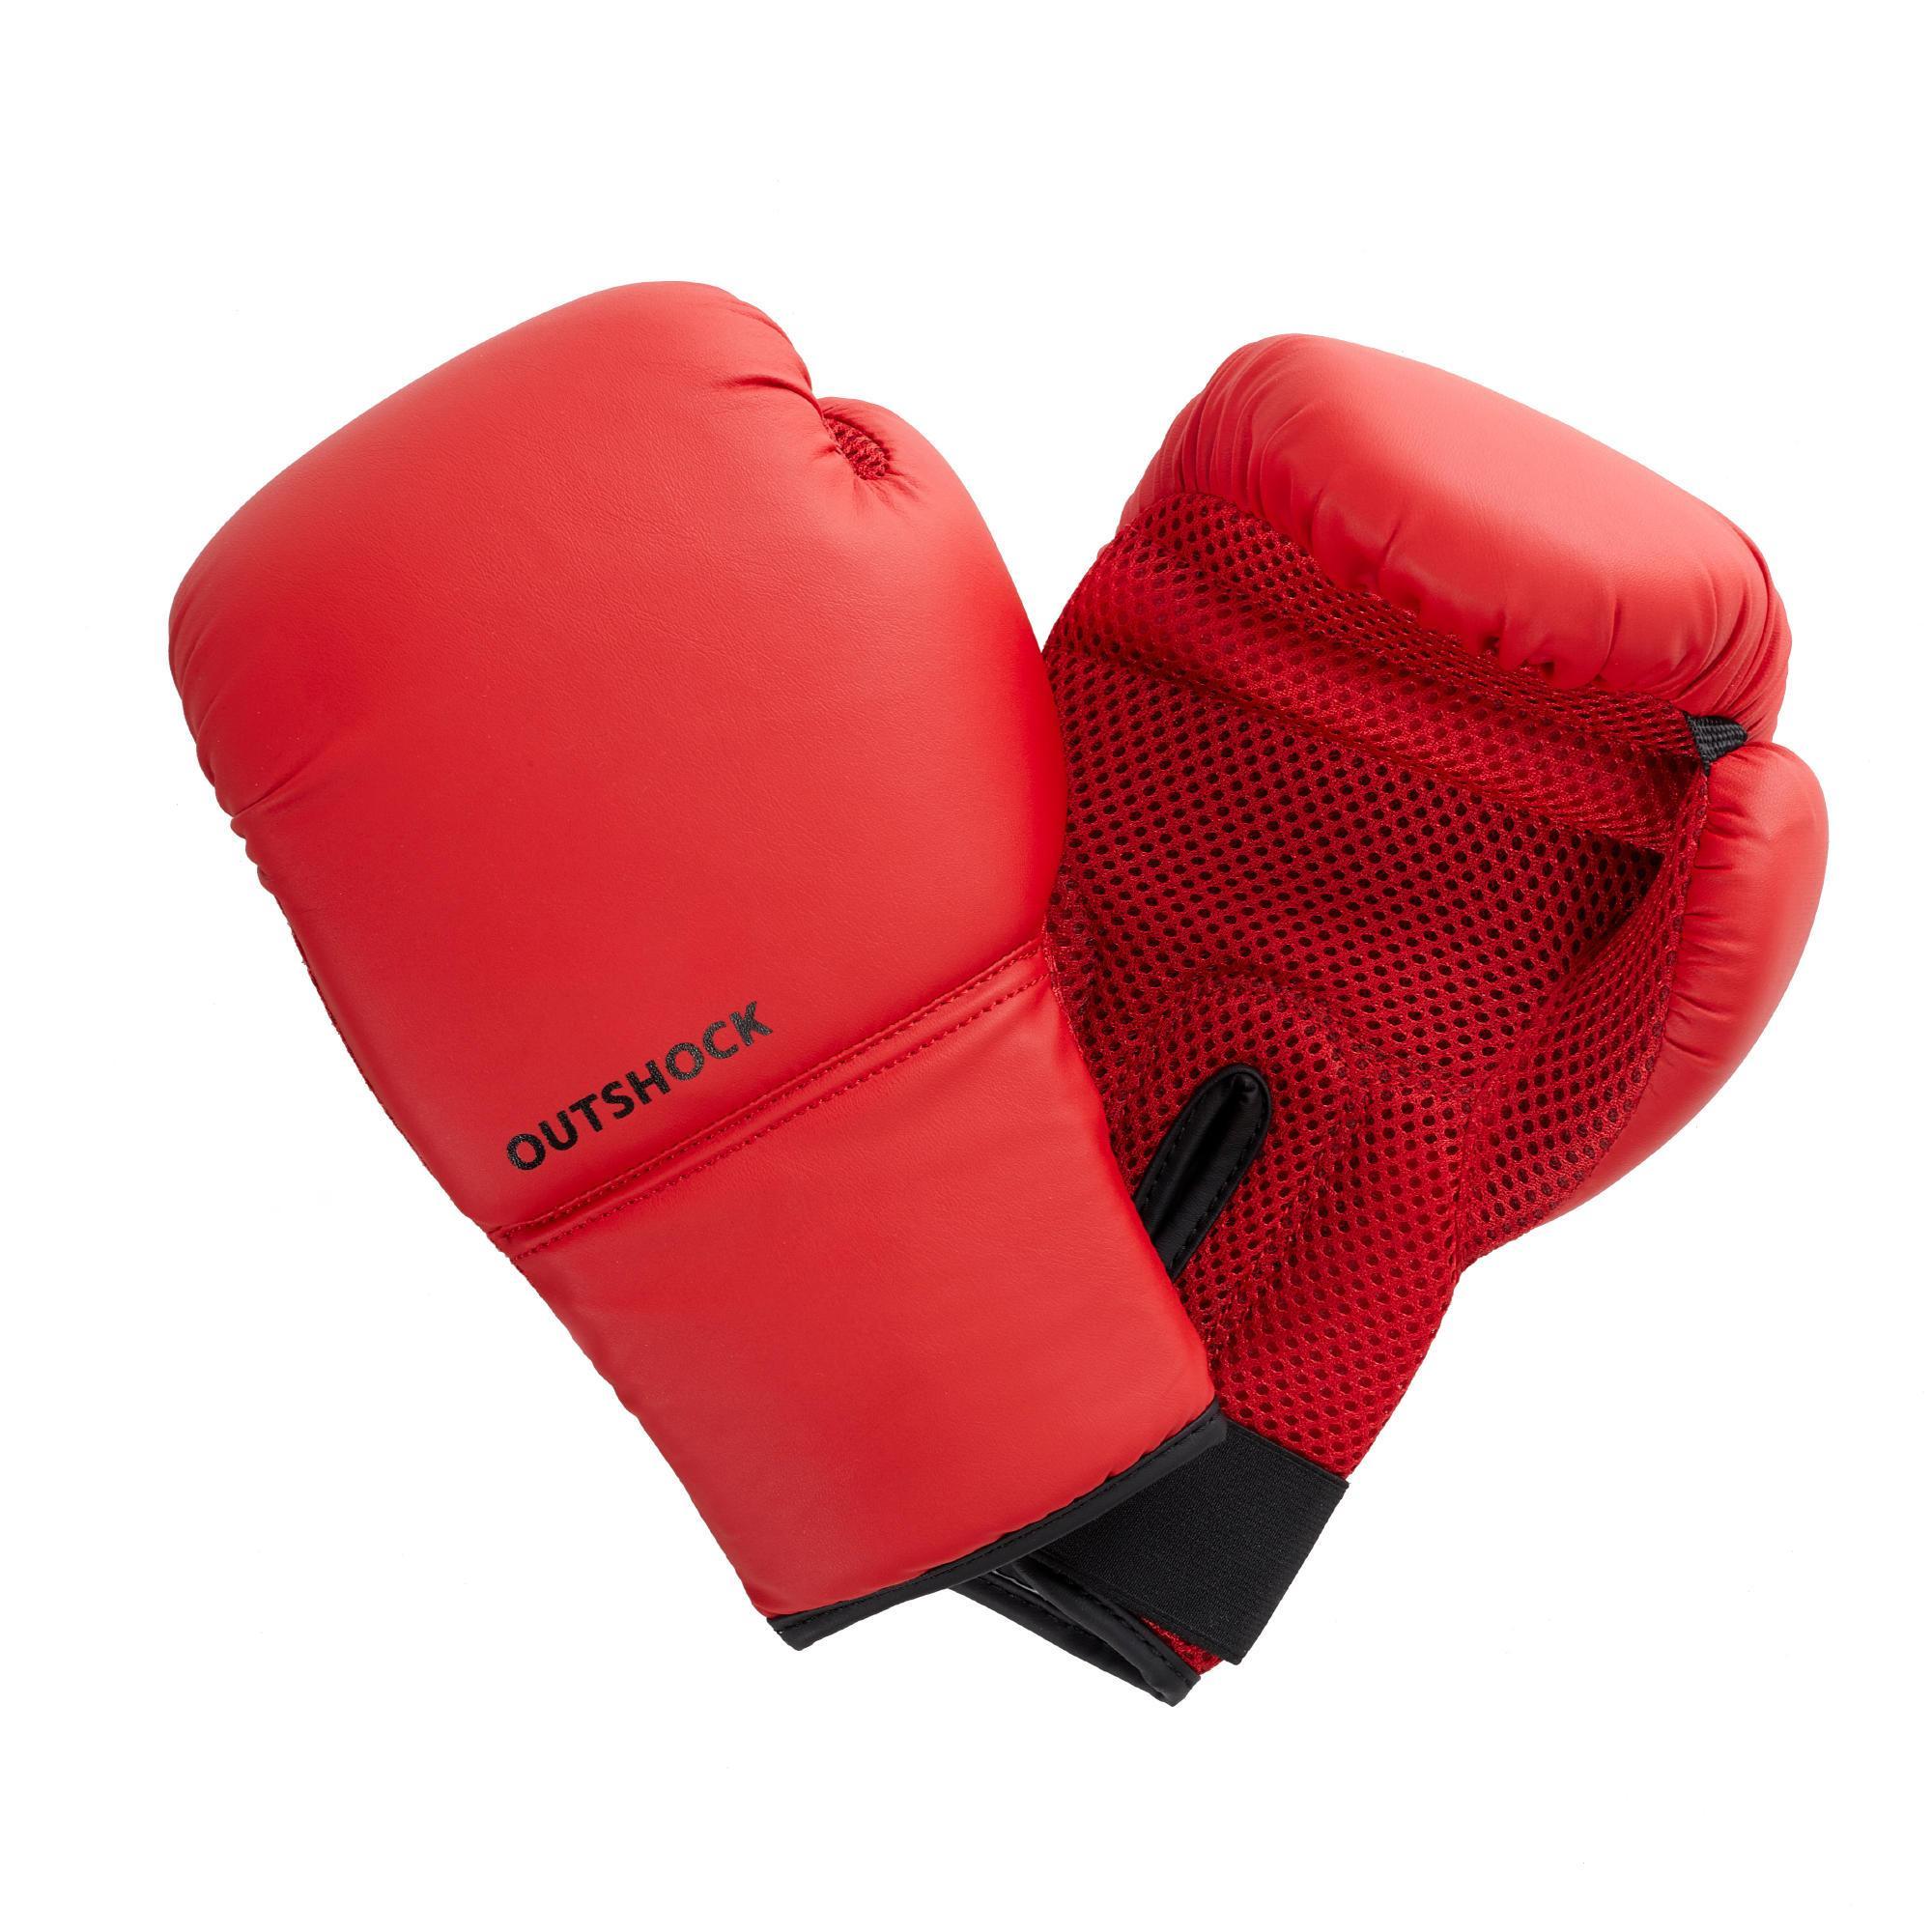 decathlon boxing equipment